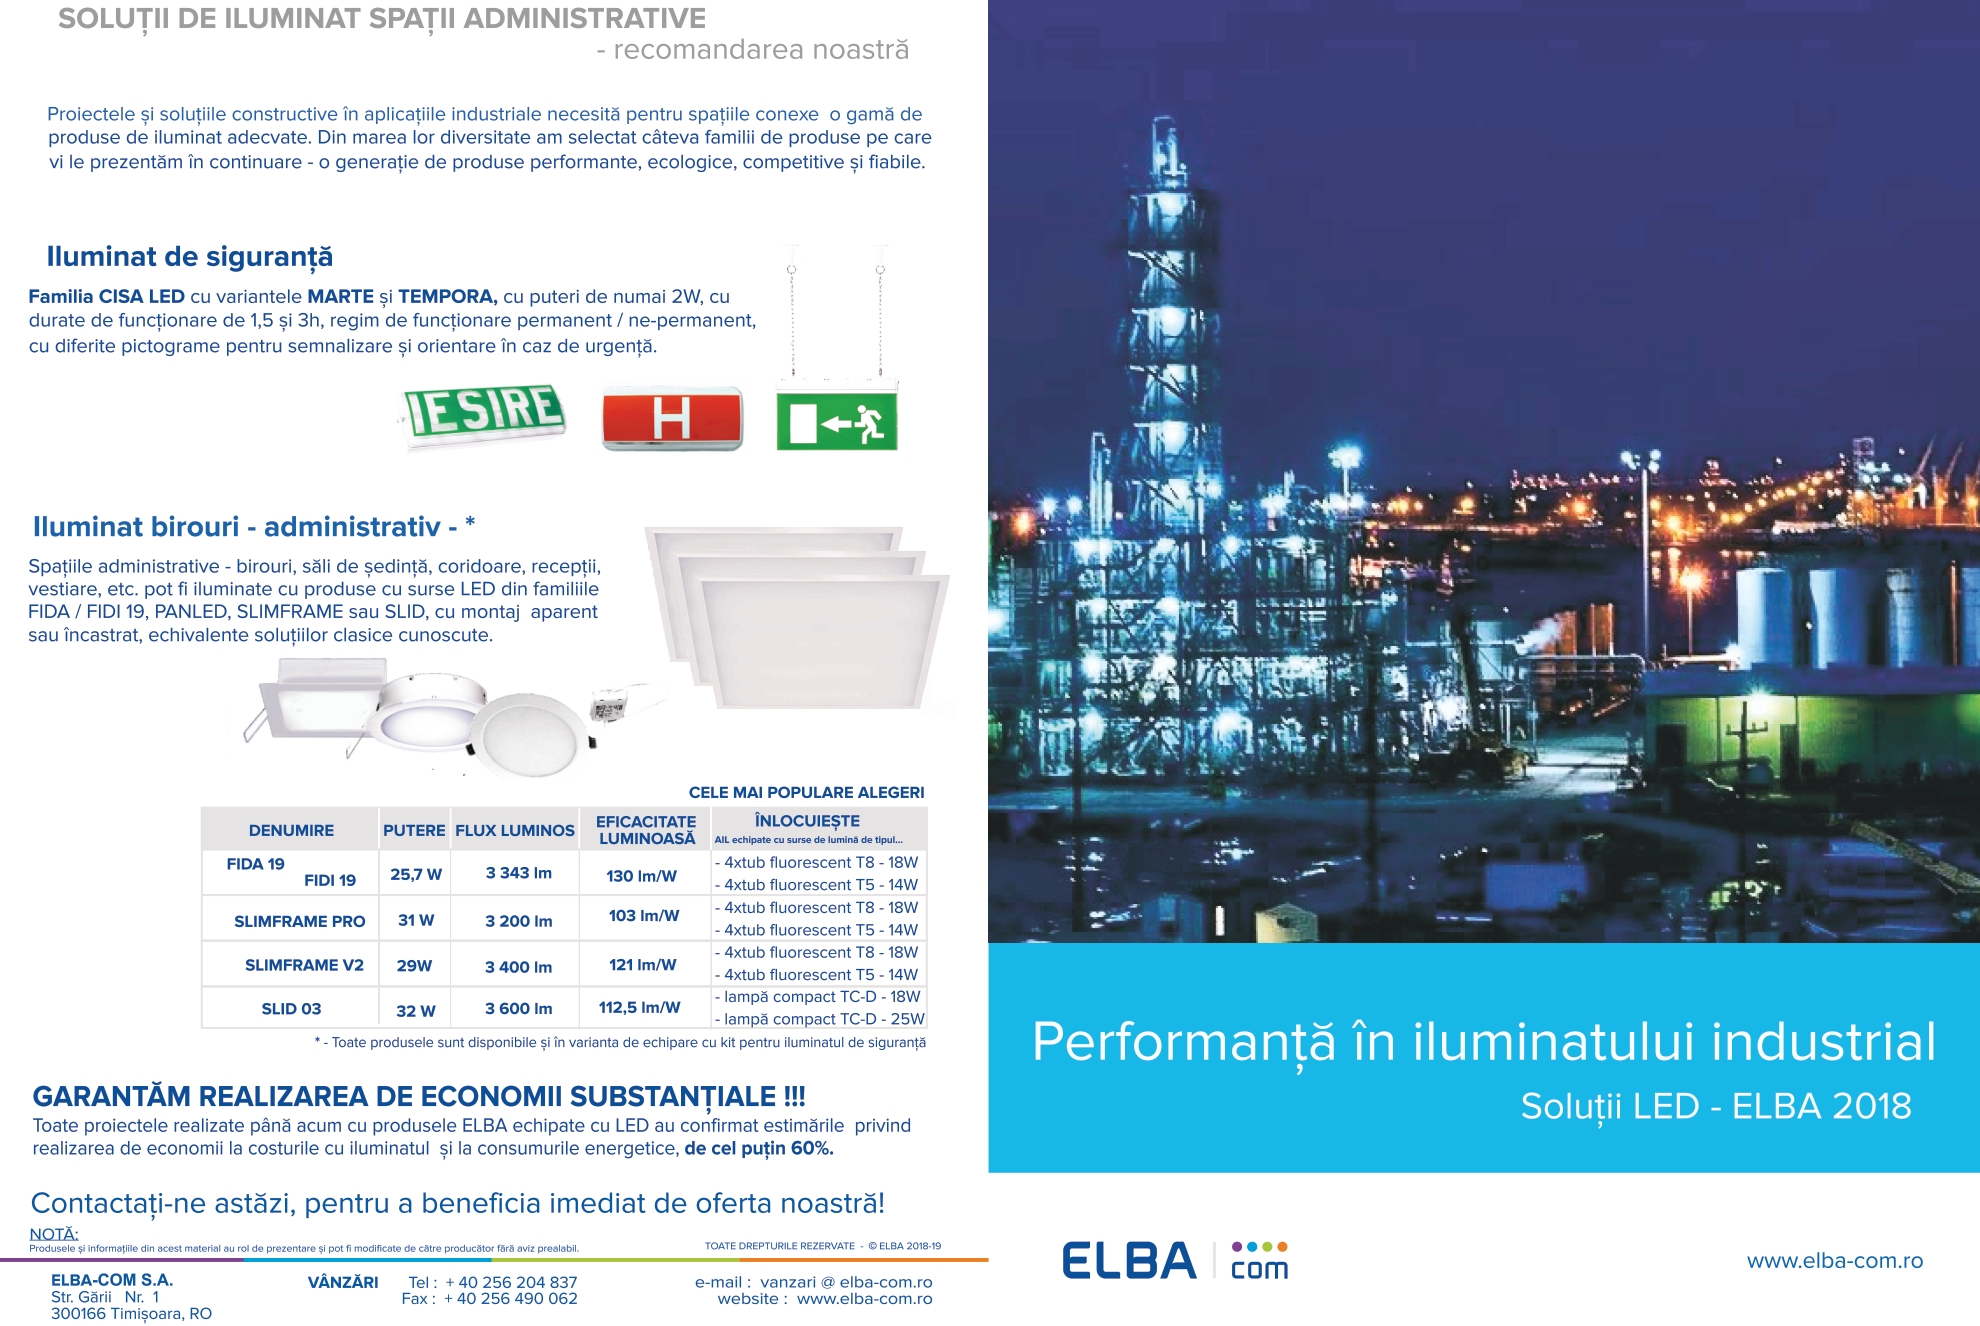 Noua brosura Solutii LED - ELBA 2018 - Performanta in iluminatul industrial